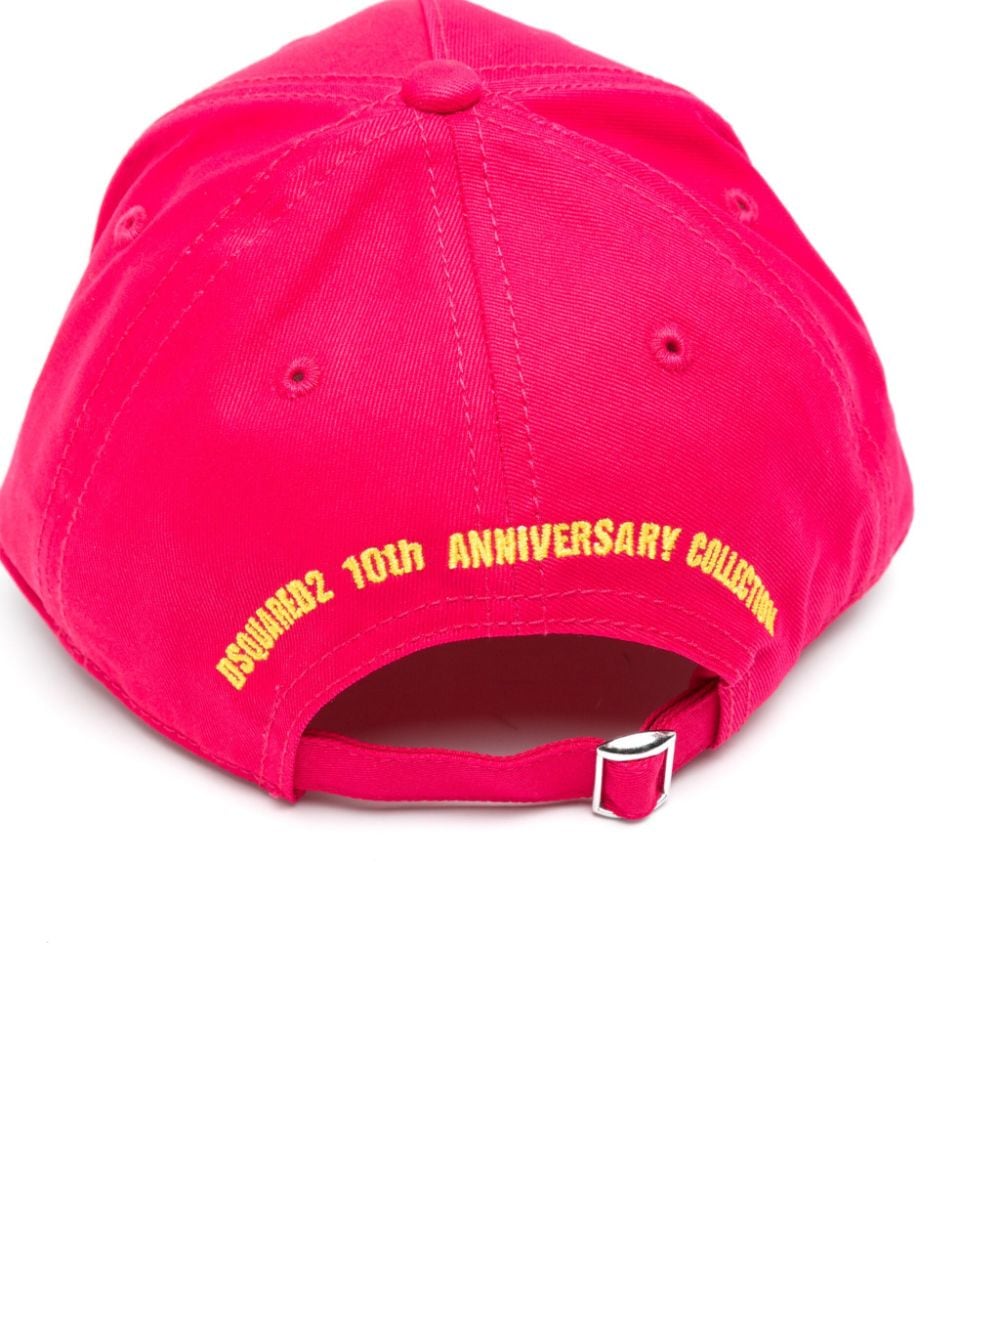 Cappello rosa/giallo unisex